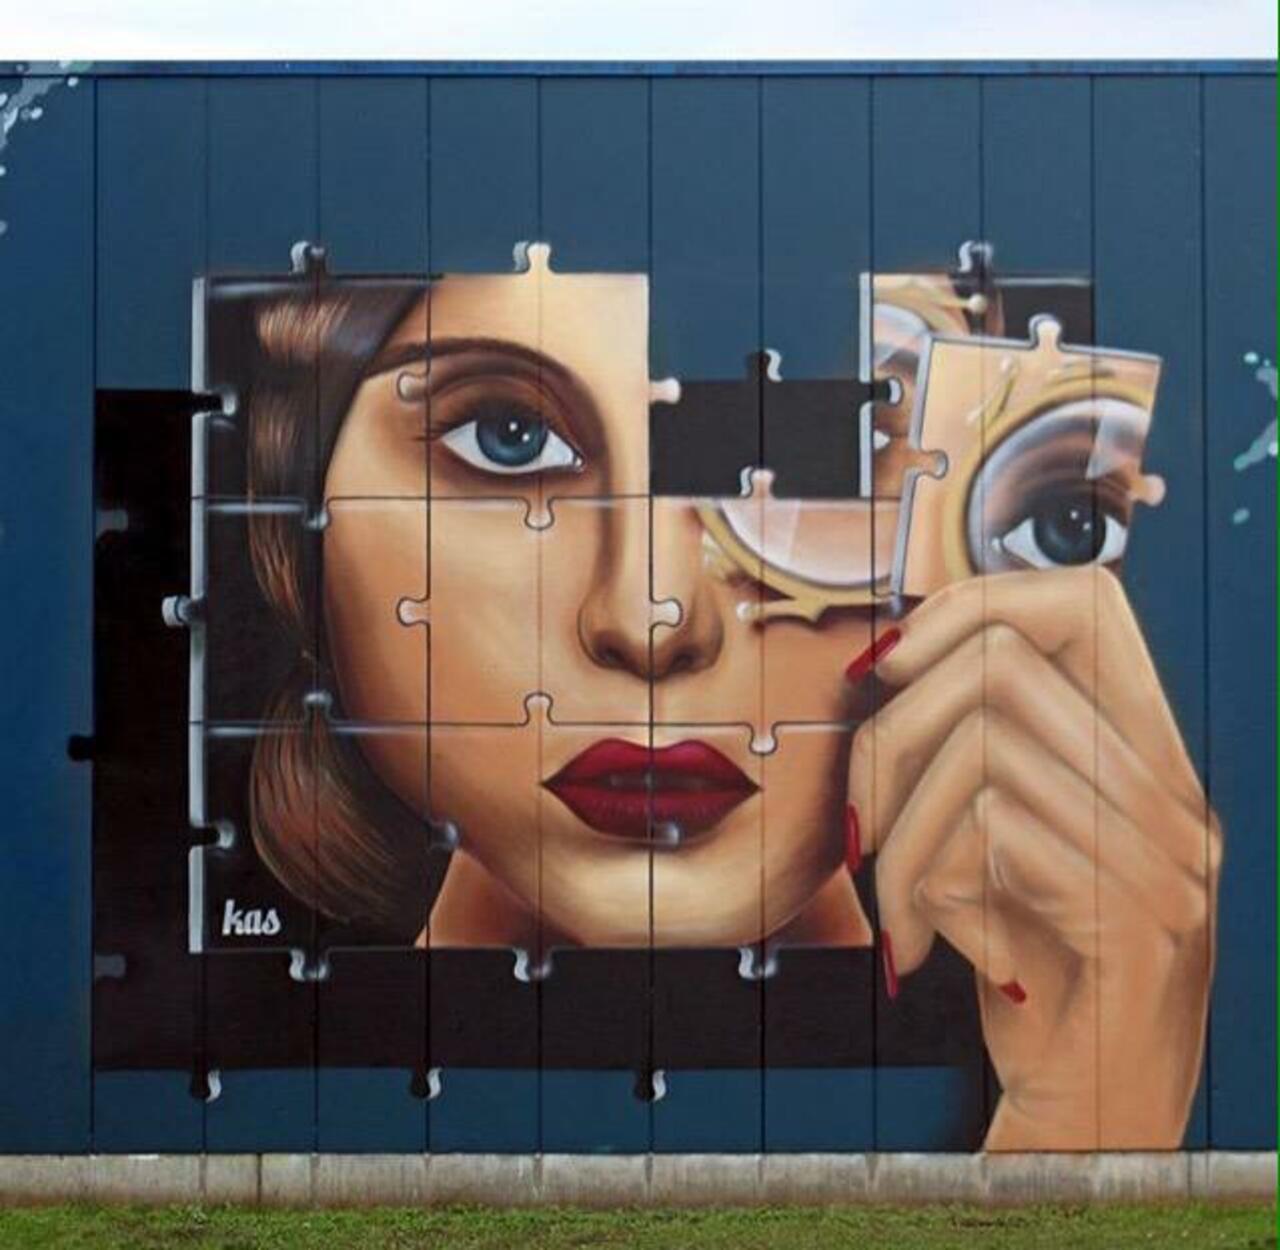 RT @aaahjoom: Kas Art's new Street Art "Piece of me" in Aalst Belgium 

#art #graffiti #mural #streetart http://t.co/kkPhLRqLon